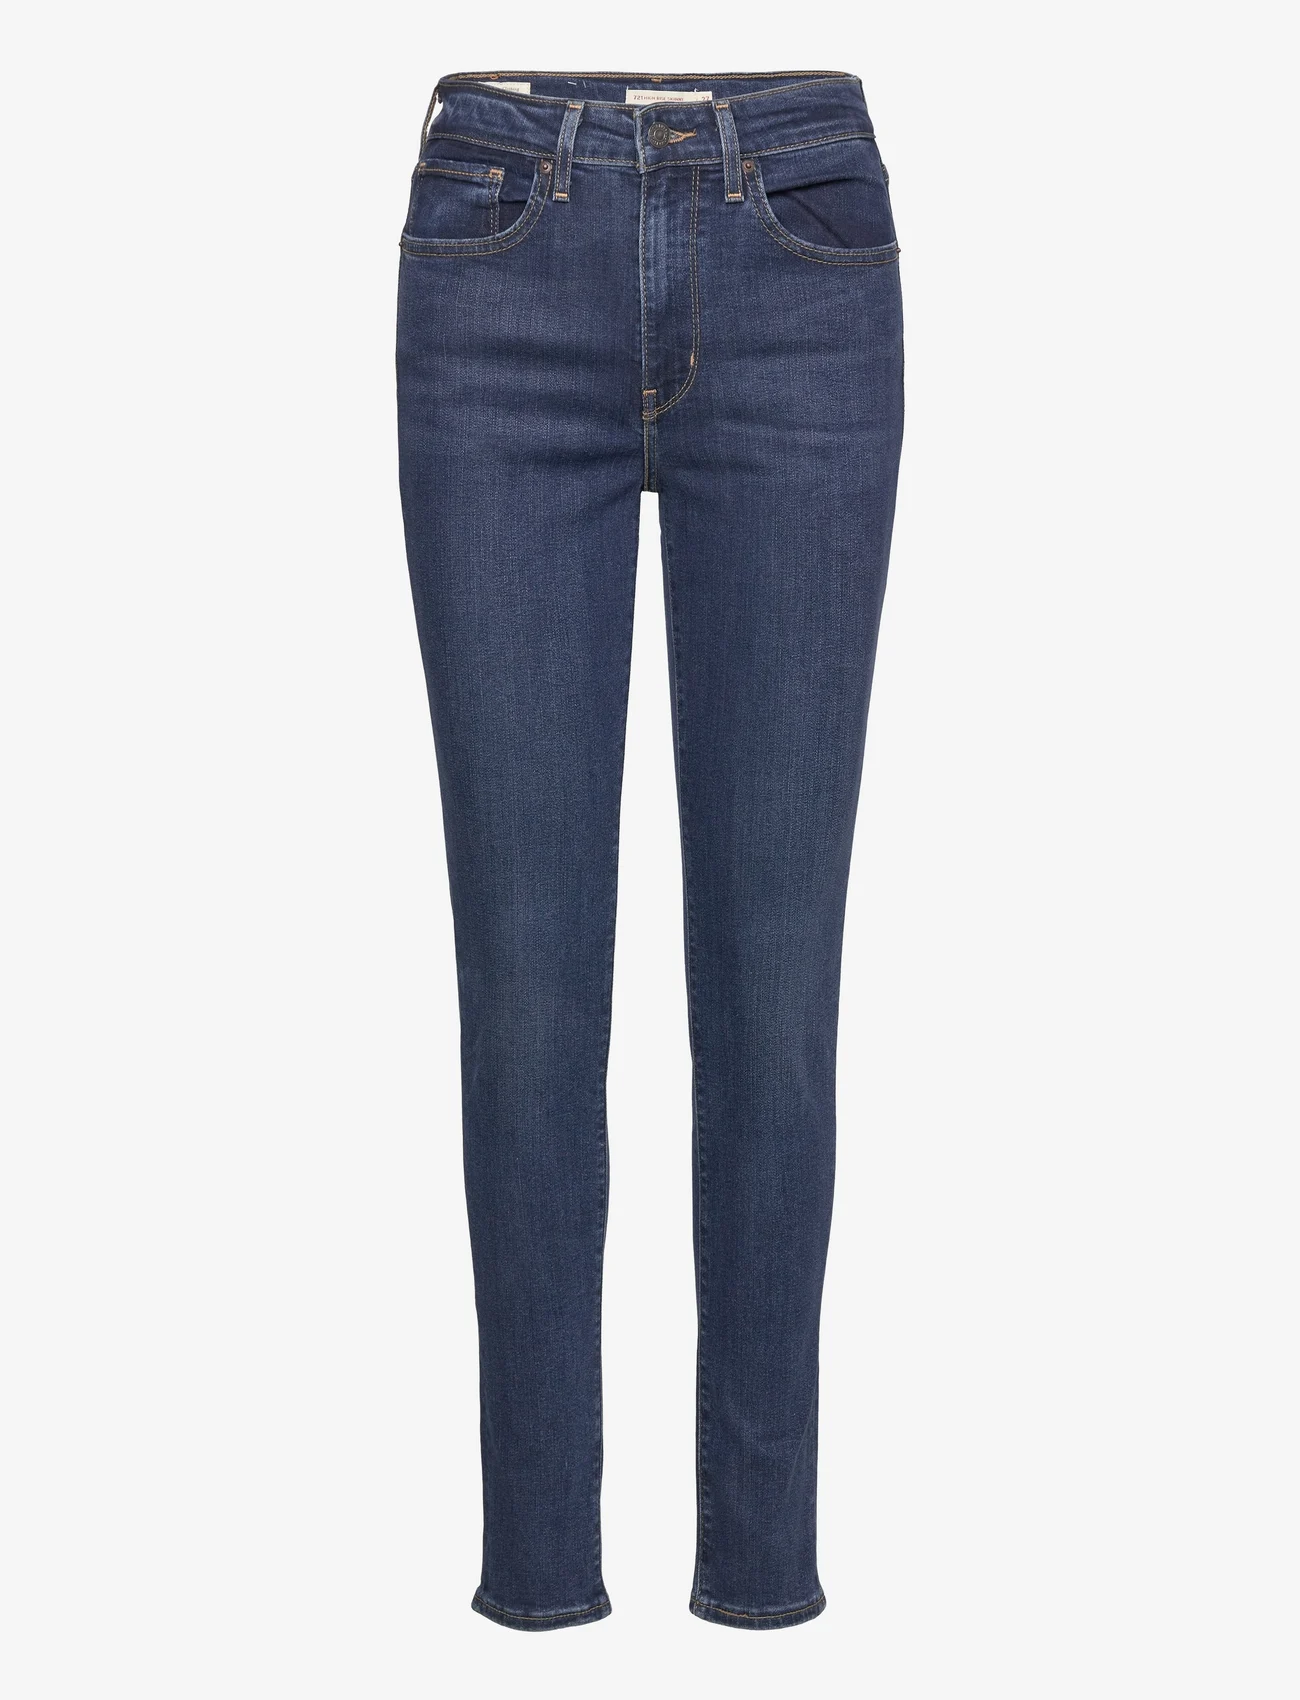 LEVI´S Women - 721 HIGH RISE SKINNY Z0741 DAR - slim jeans - dark indigo - worn in - 0